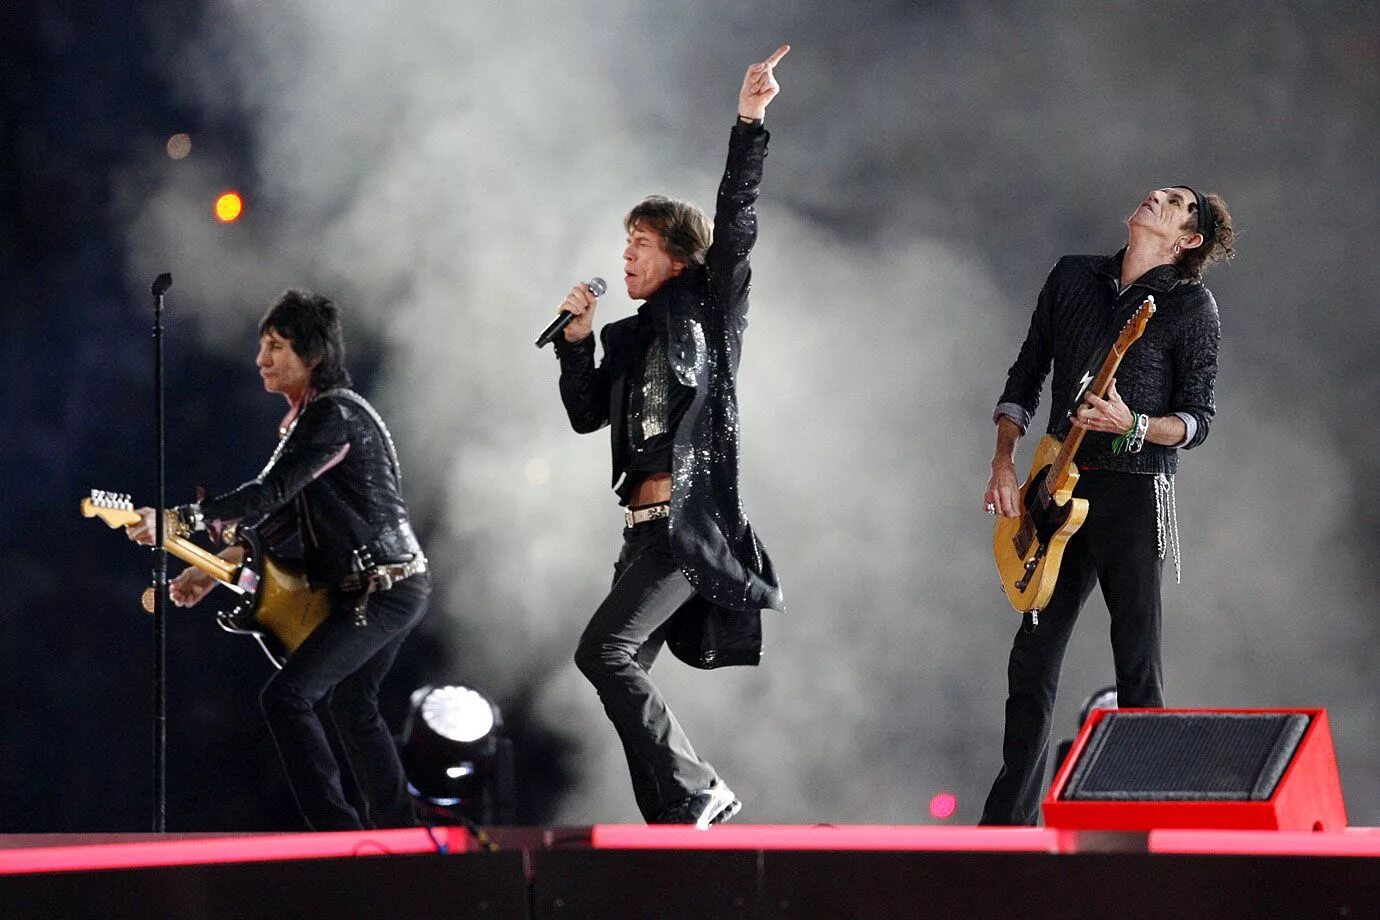 The Rolling Stones. Rolling Stones фото. Bowrockband гокгруппа. Фанаты рок группы Роллинг стоунз.